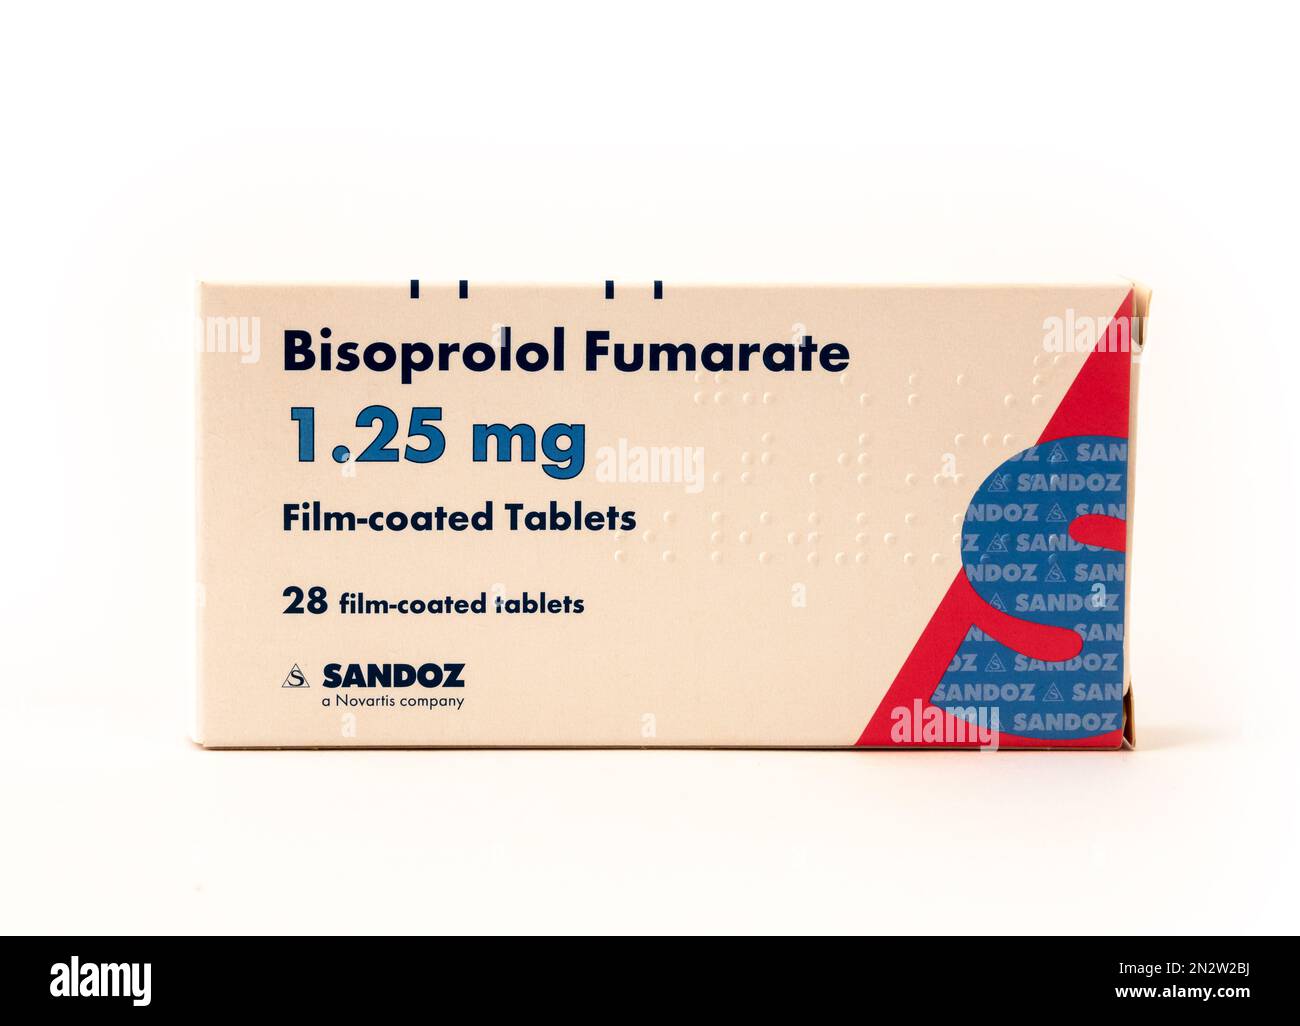 Bisoprolol Fumarate: a beta blocker drug used to treat high blood pressure. Stock Photo